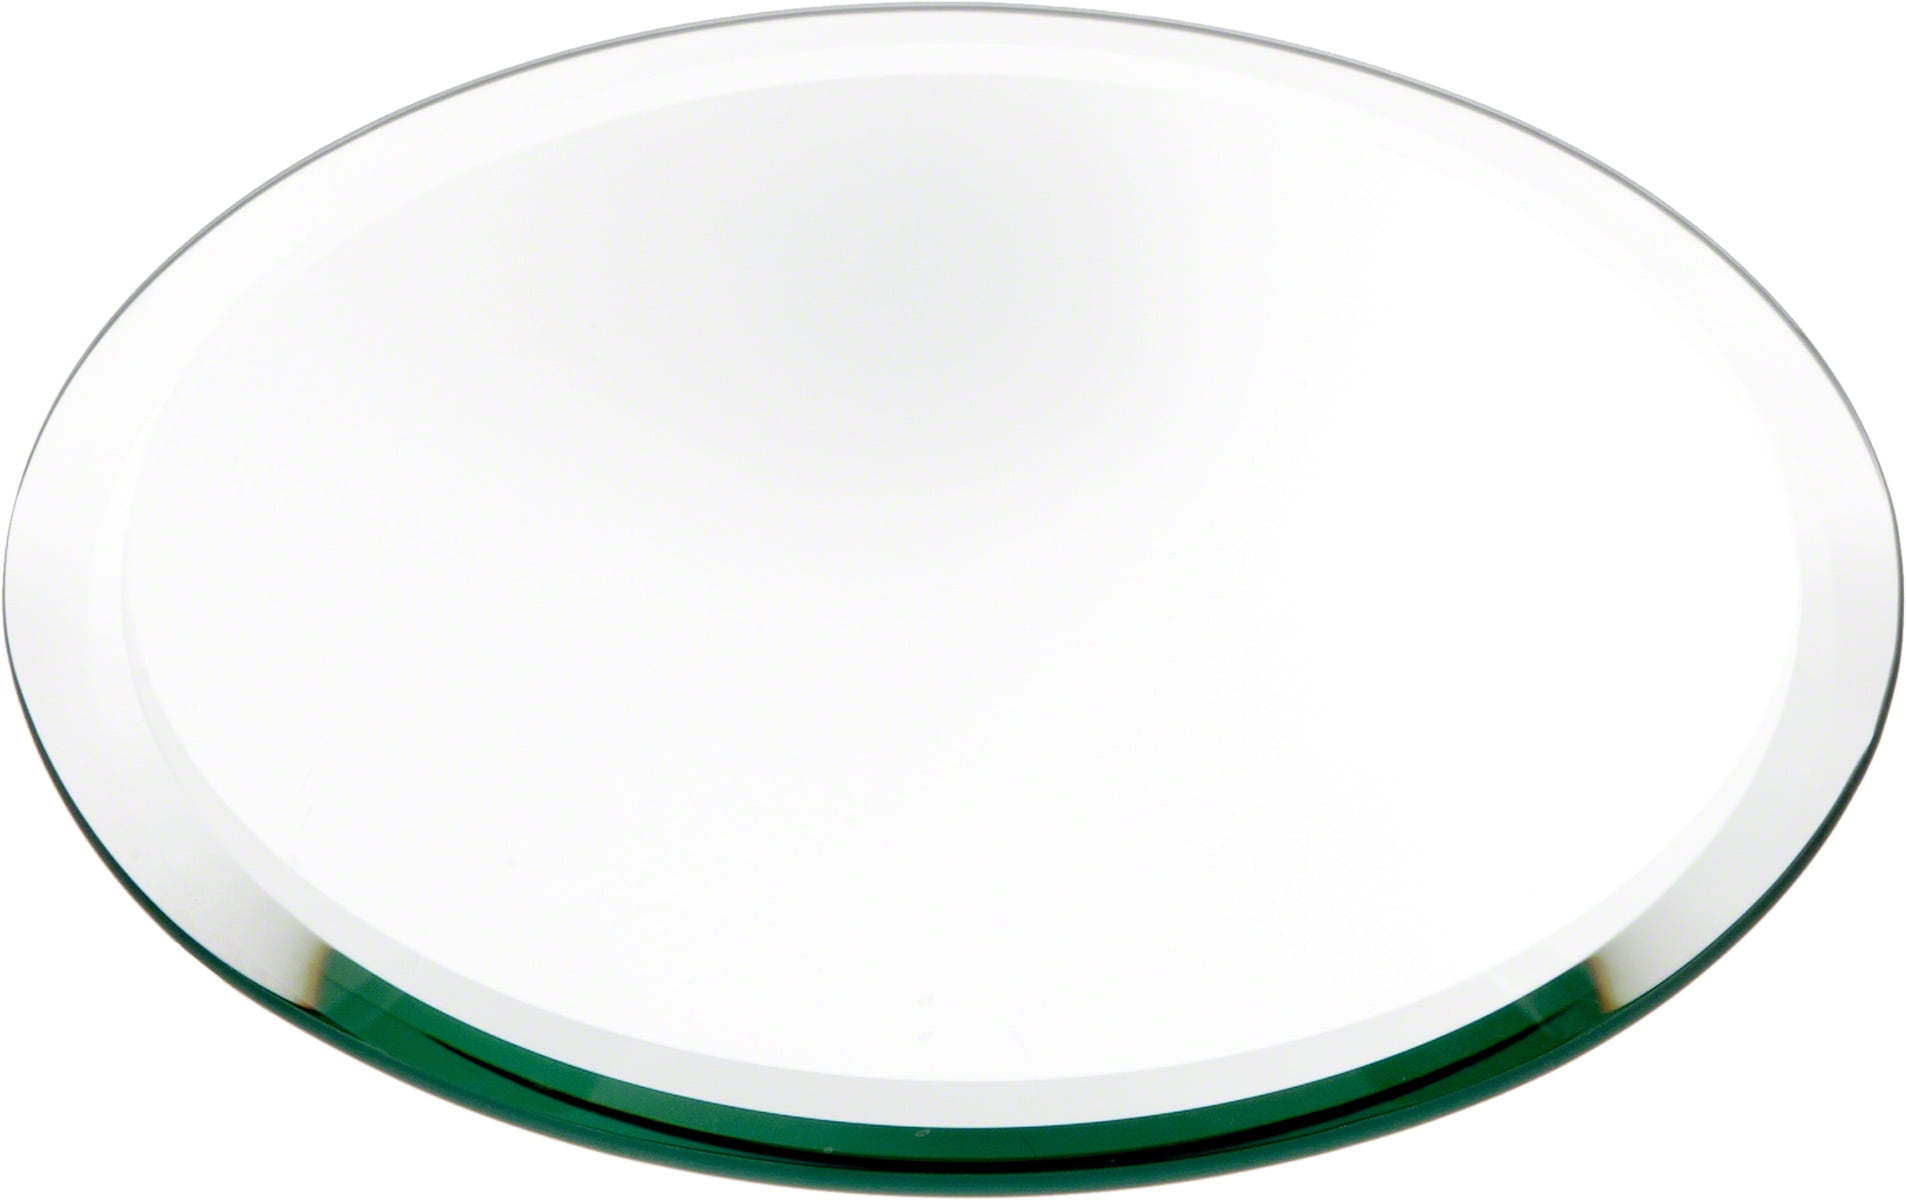 Plymor Oval 5mm Beveled Glass Mirror 7 inch x 9 inch 